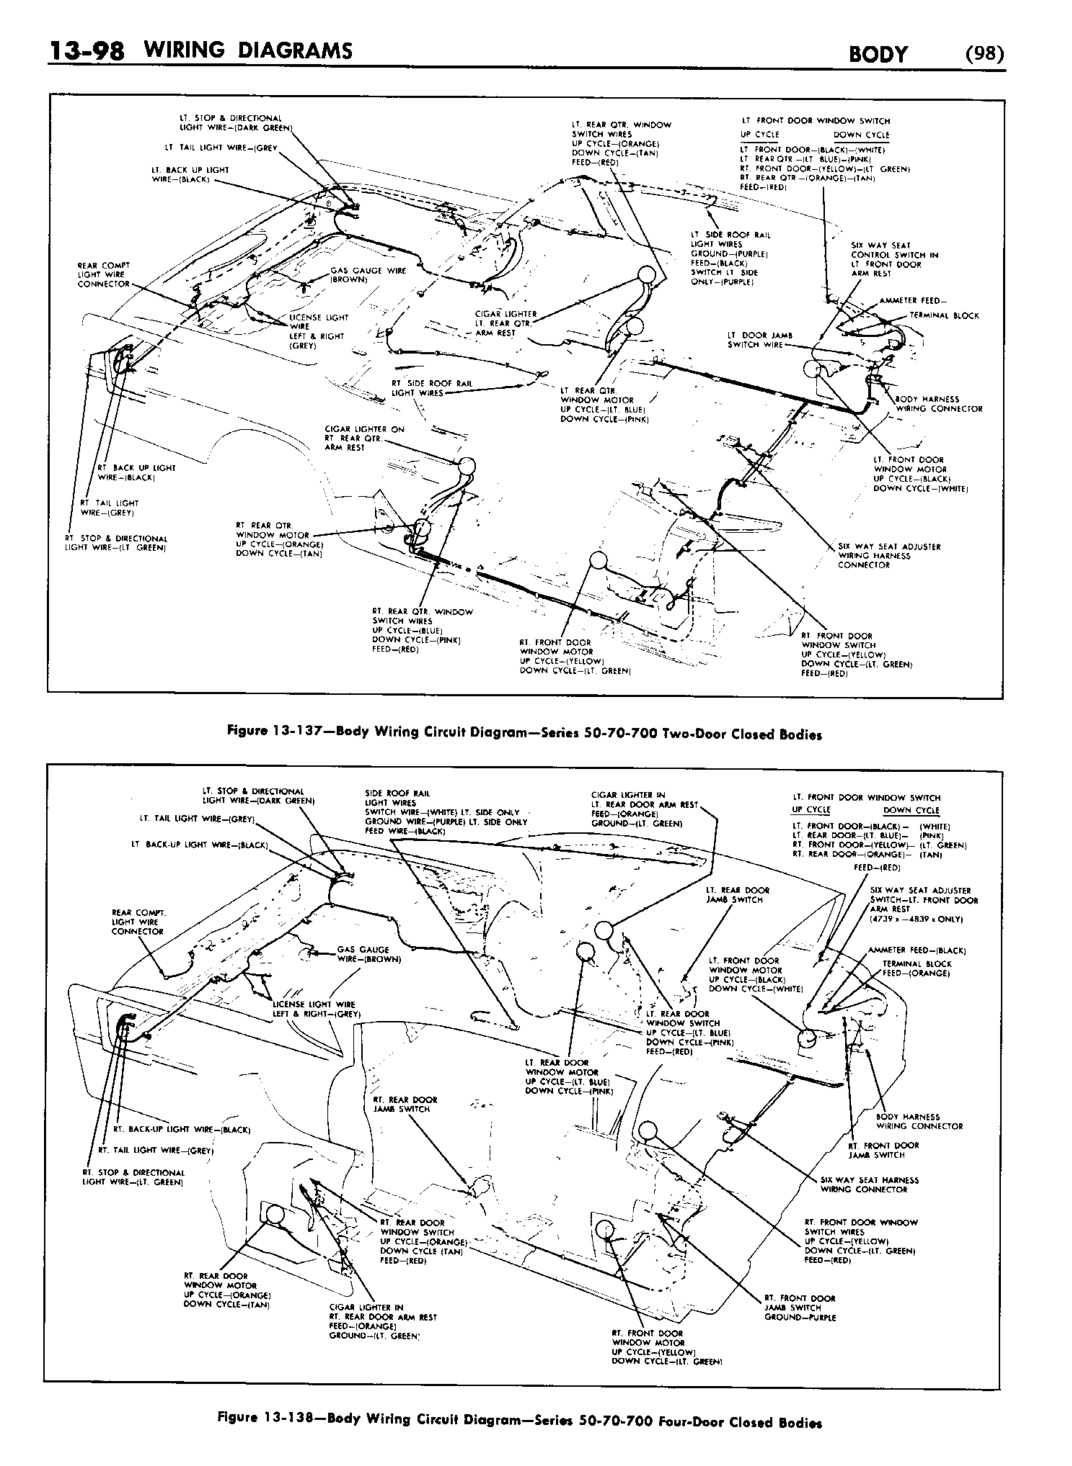 n_1958 Buick Body Service Manual-099-099.jpg